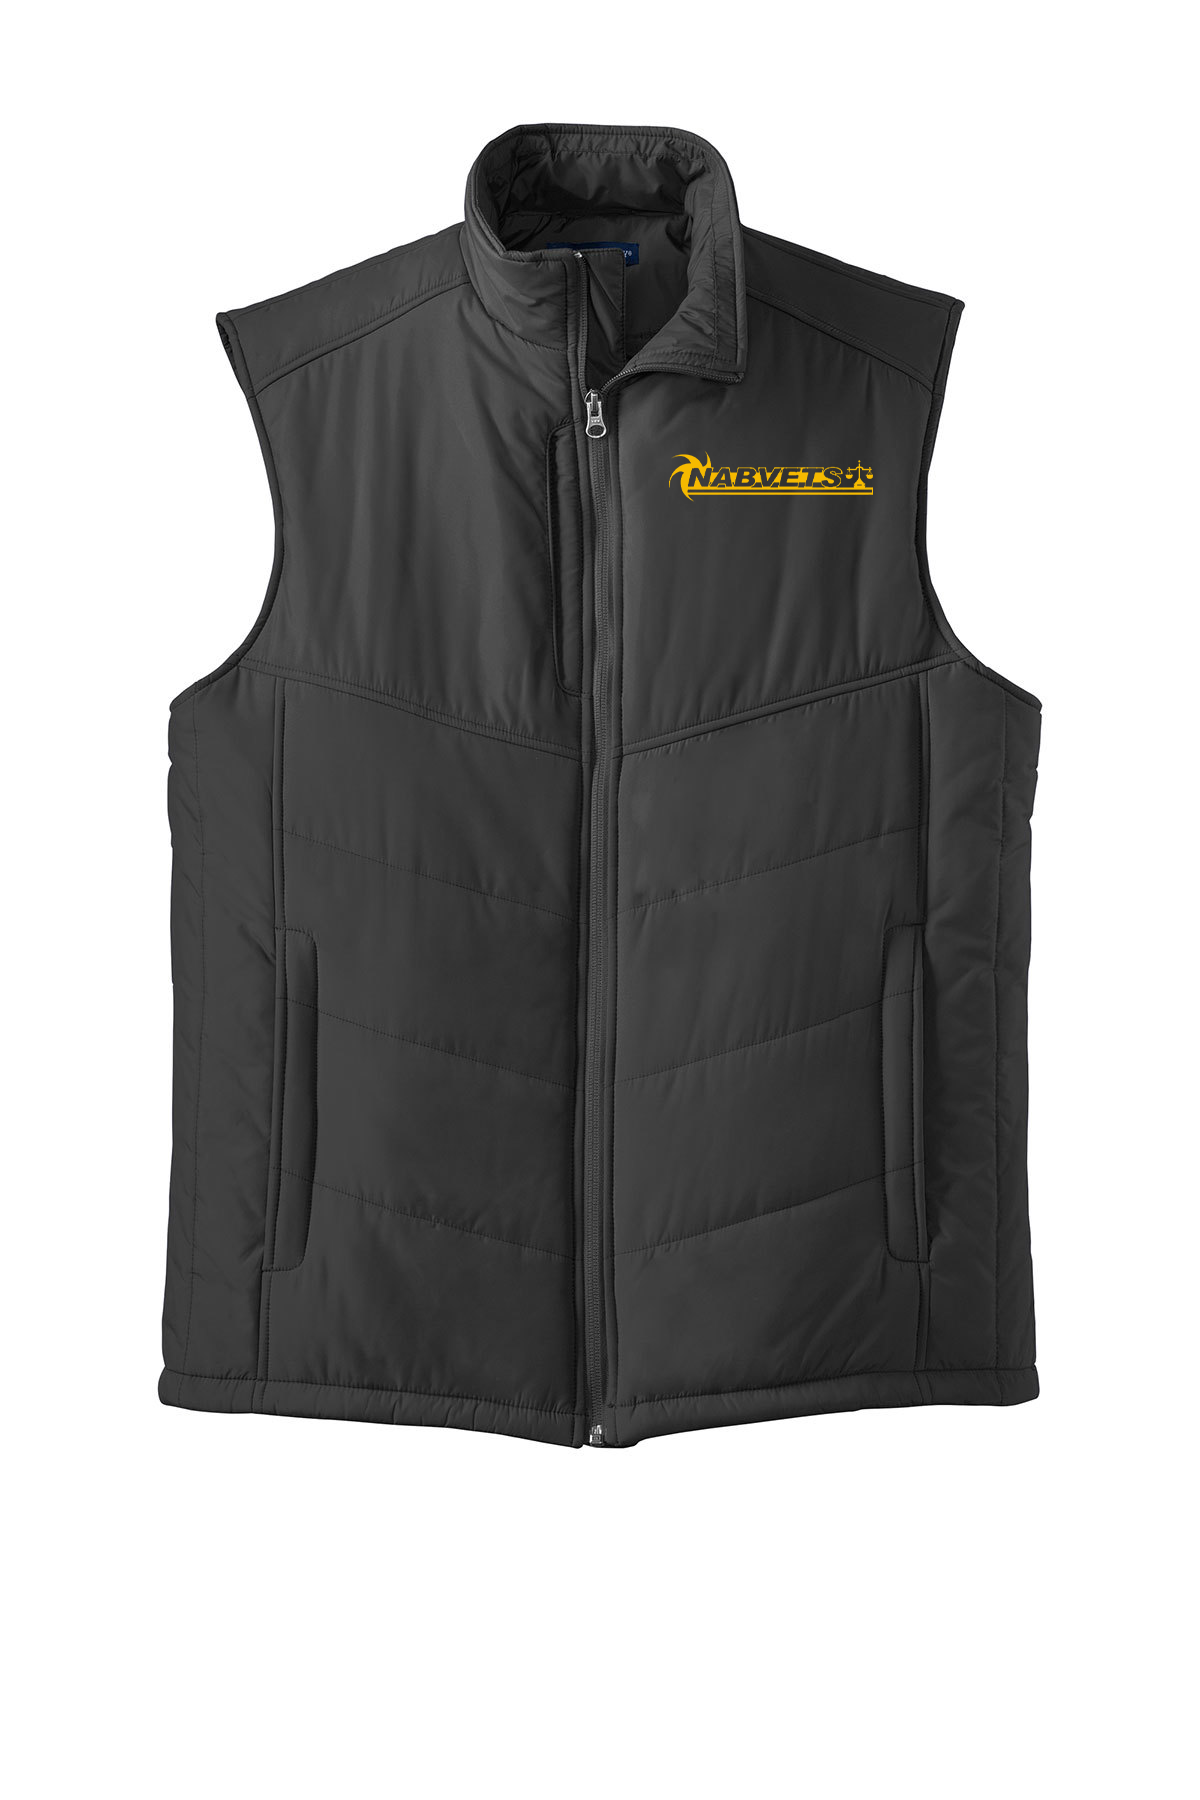 Port Authority® J709 Puffy Vest